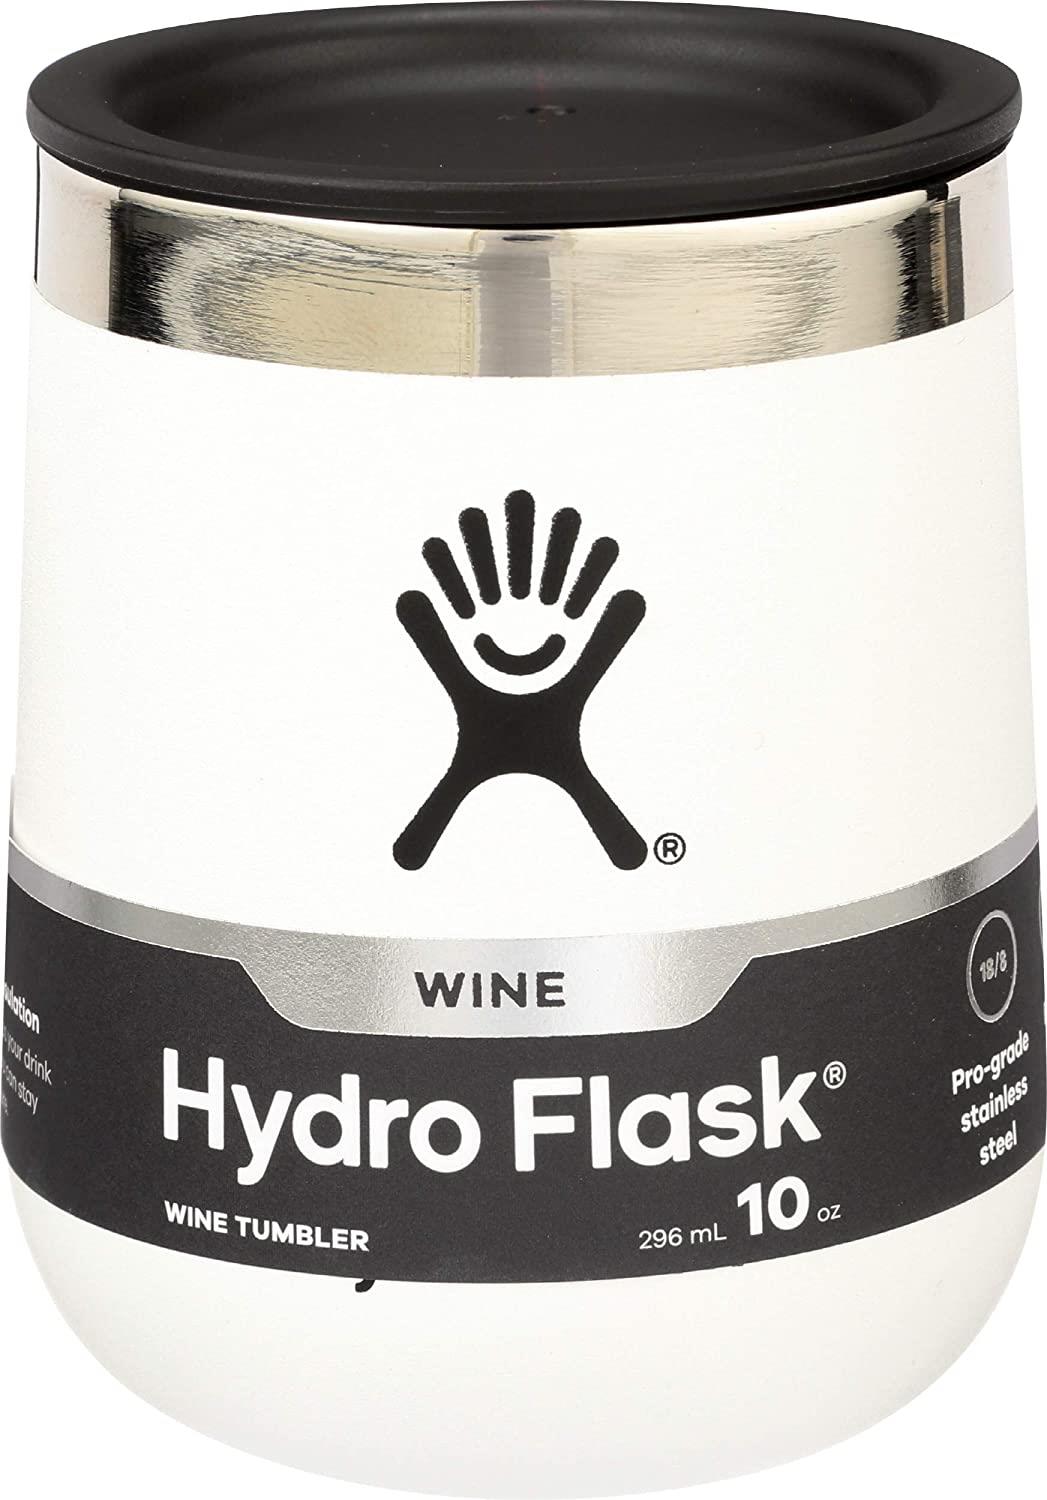 Hydro Flask 10oz Wine Tumbler Black